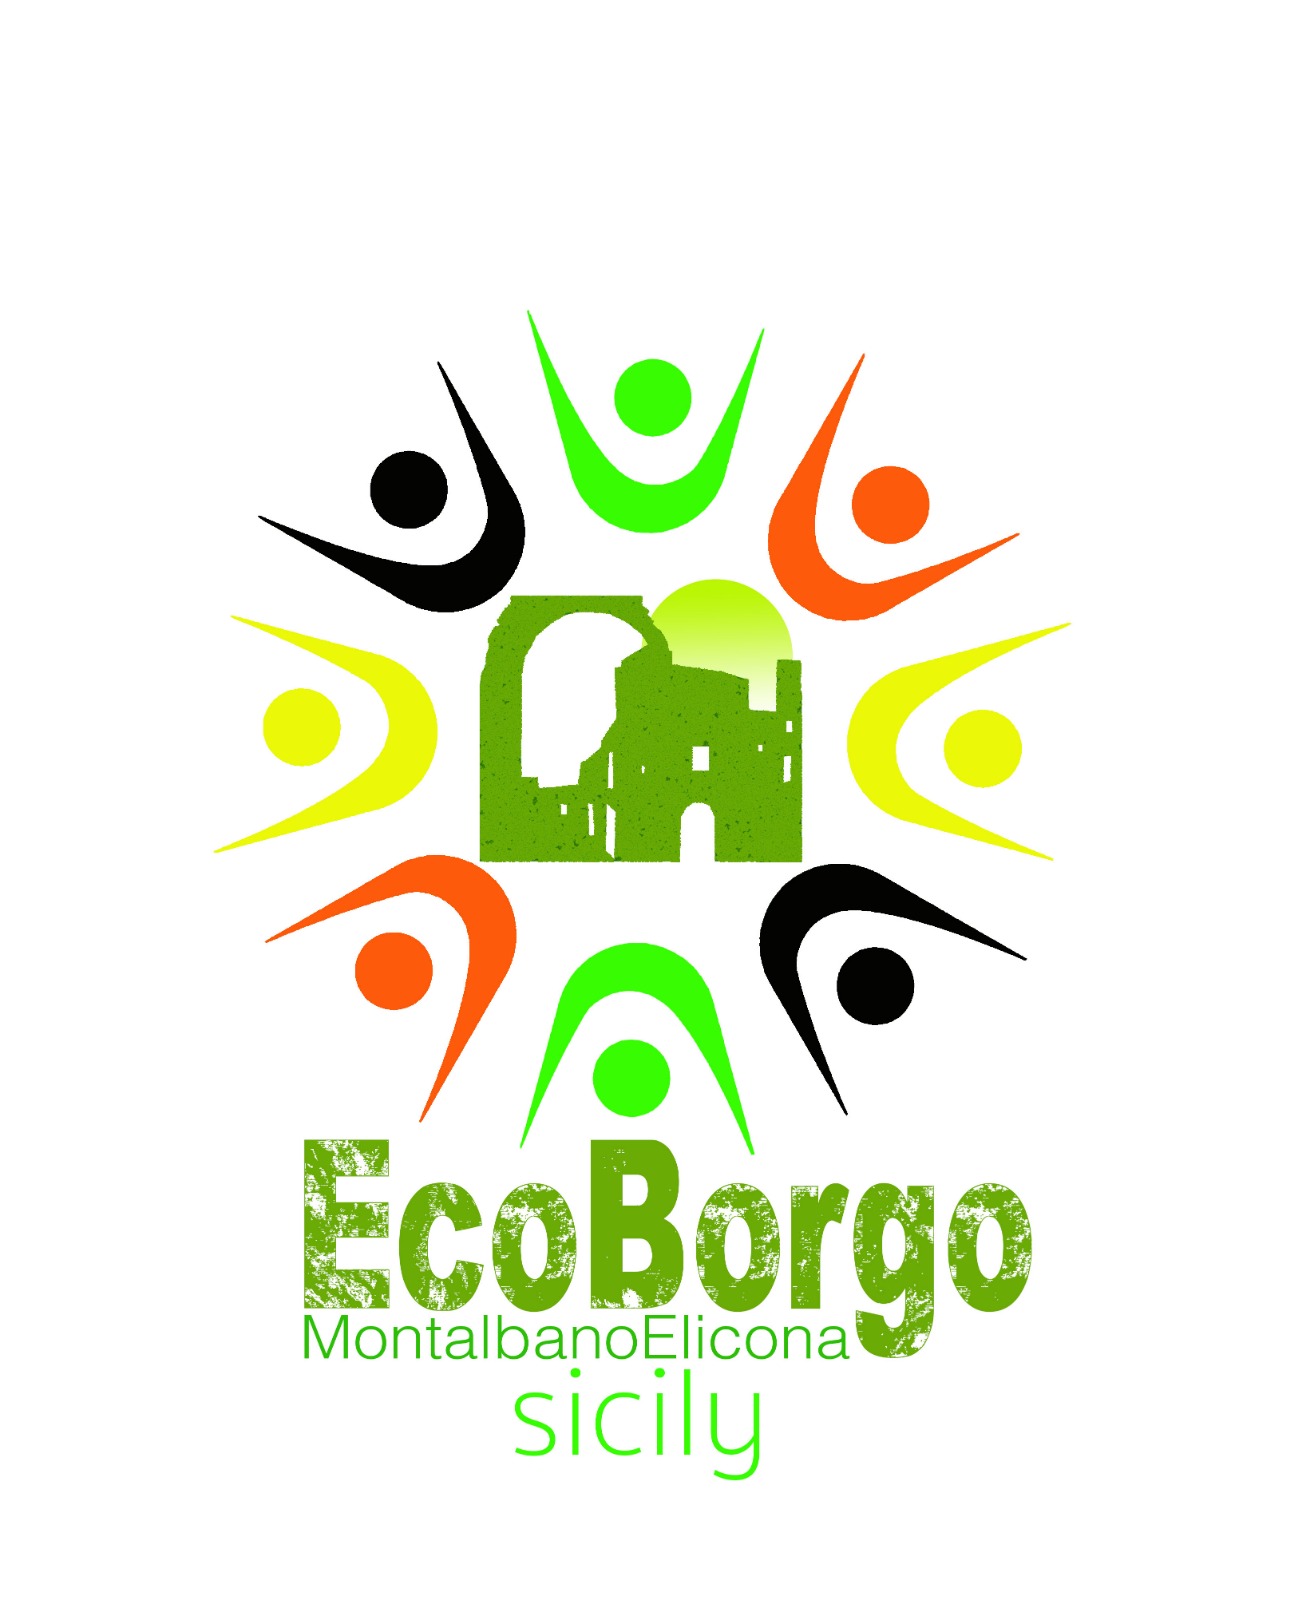 Eco-Borgo di Montalbano Elicona